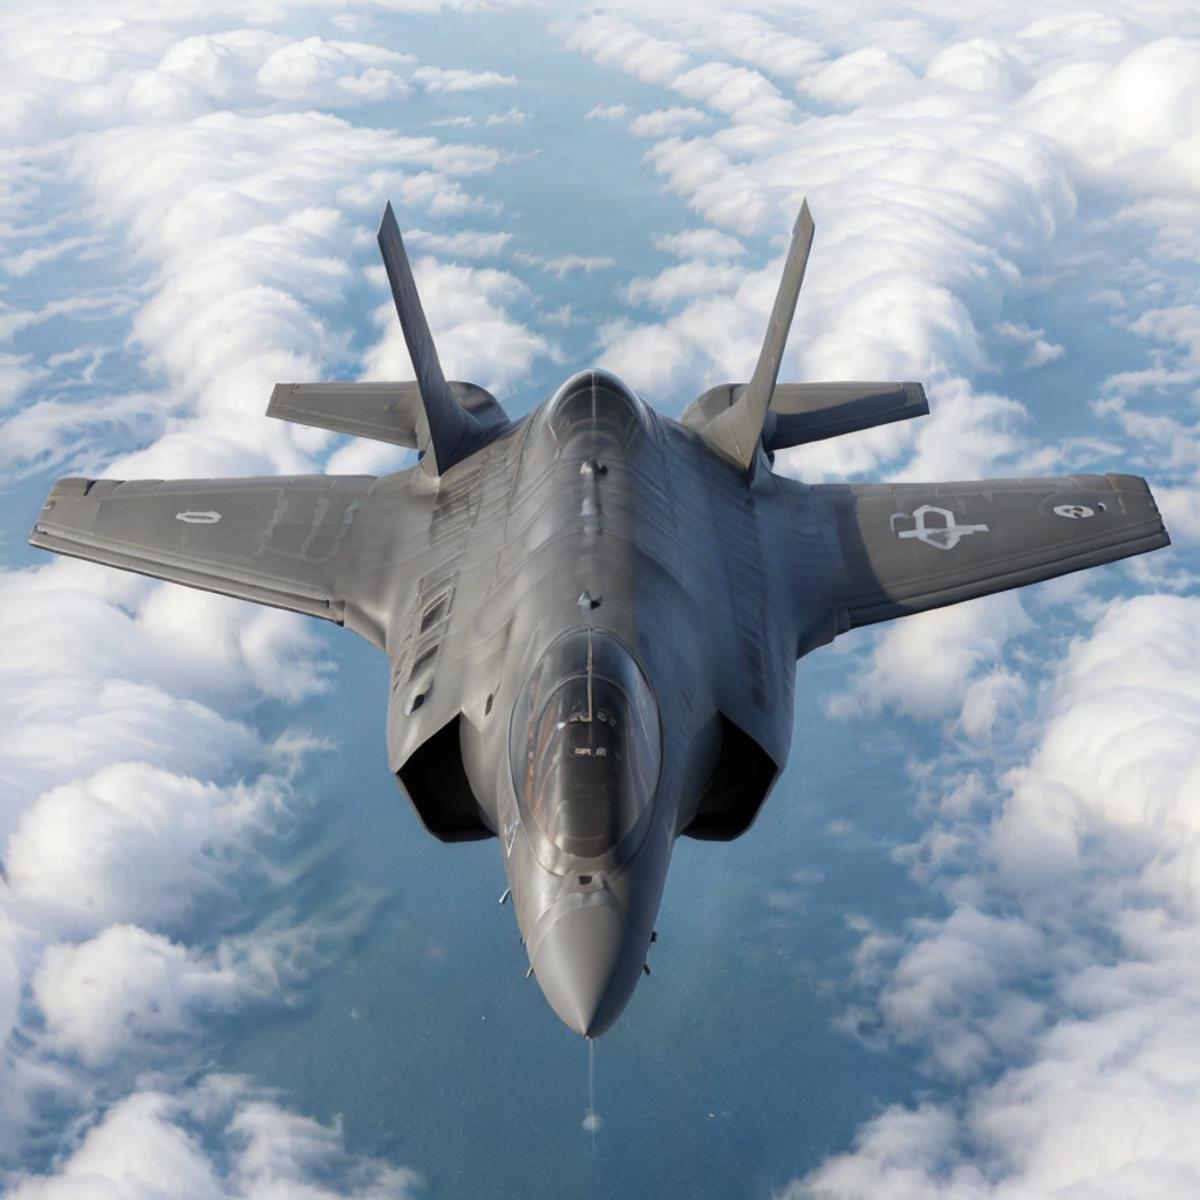 F-35 Lightning II image by 7533967